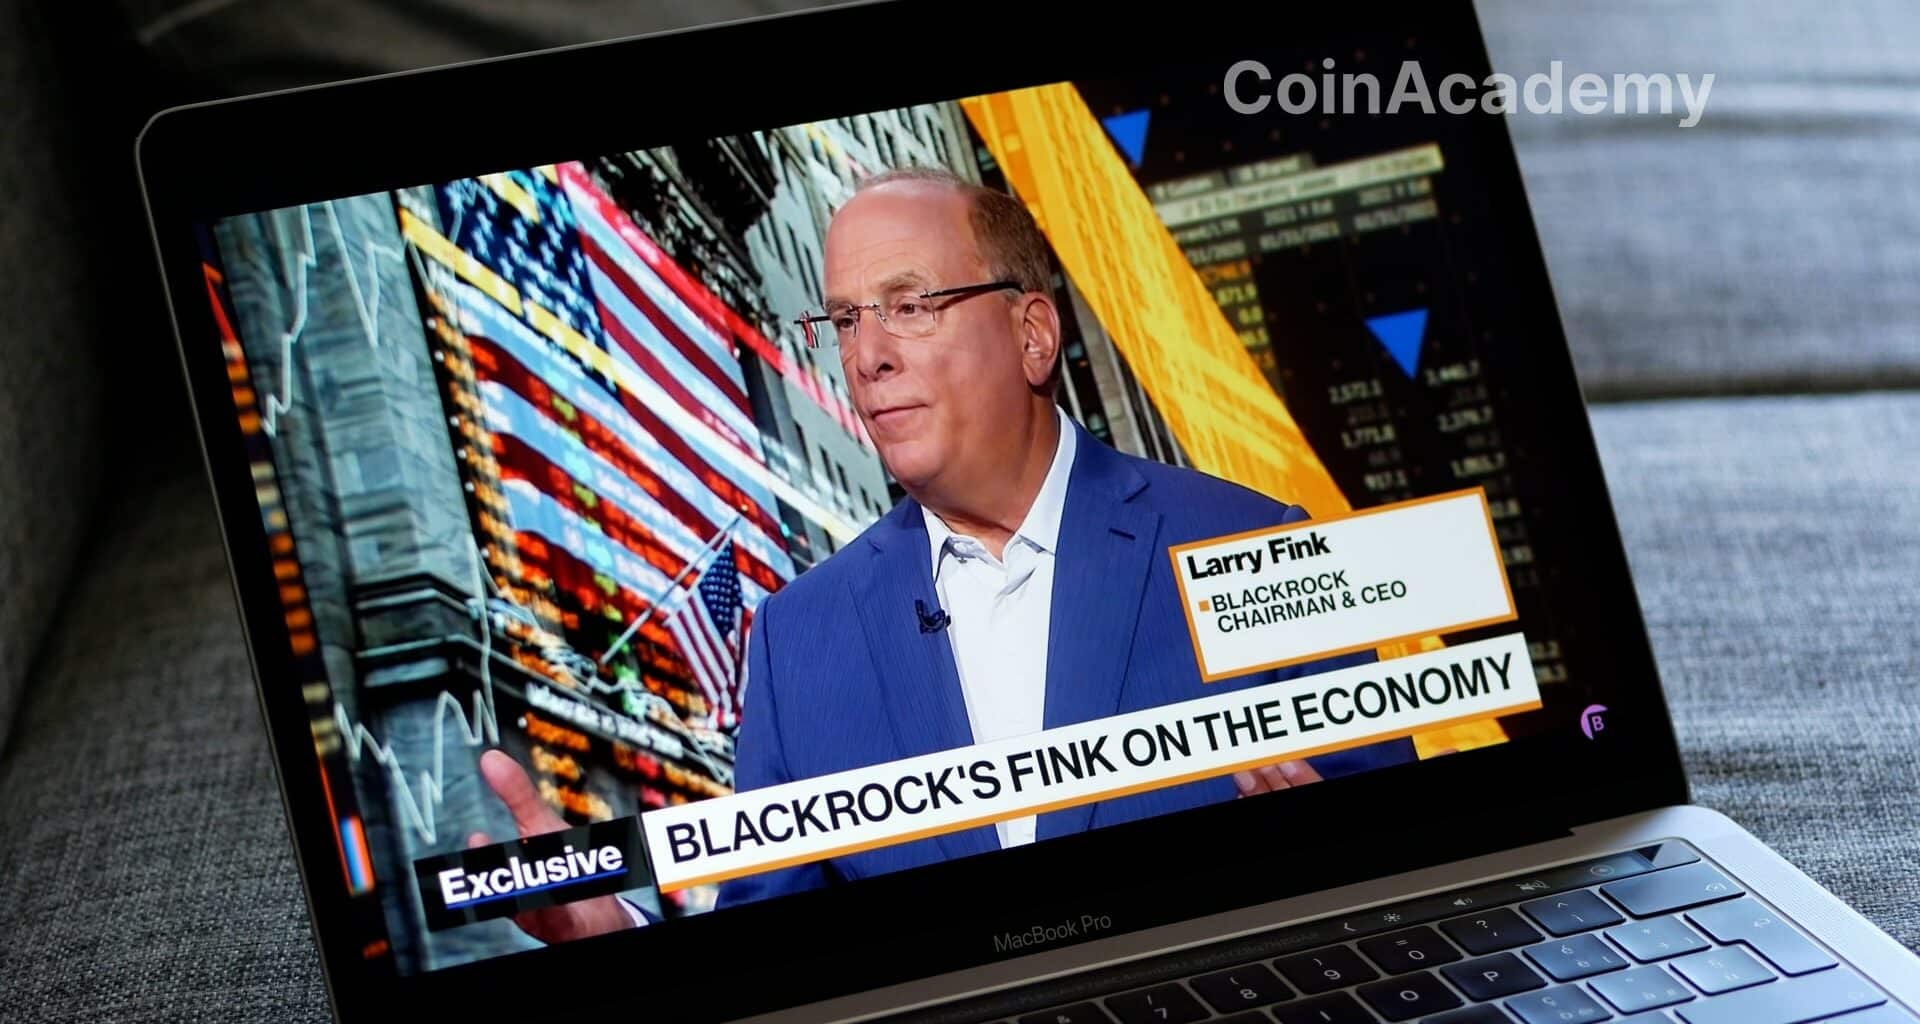 Larry fink blackrock crypto economie